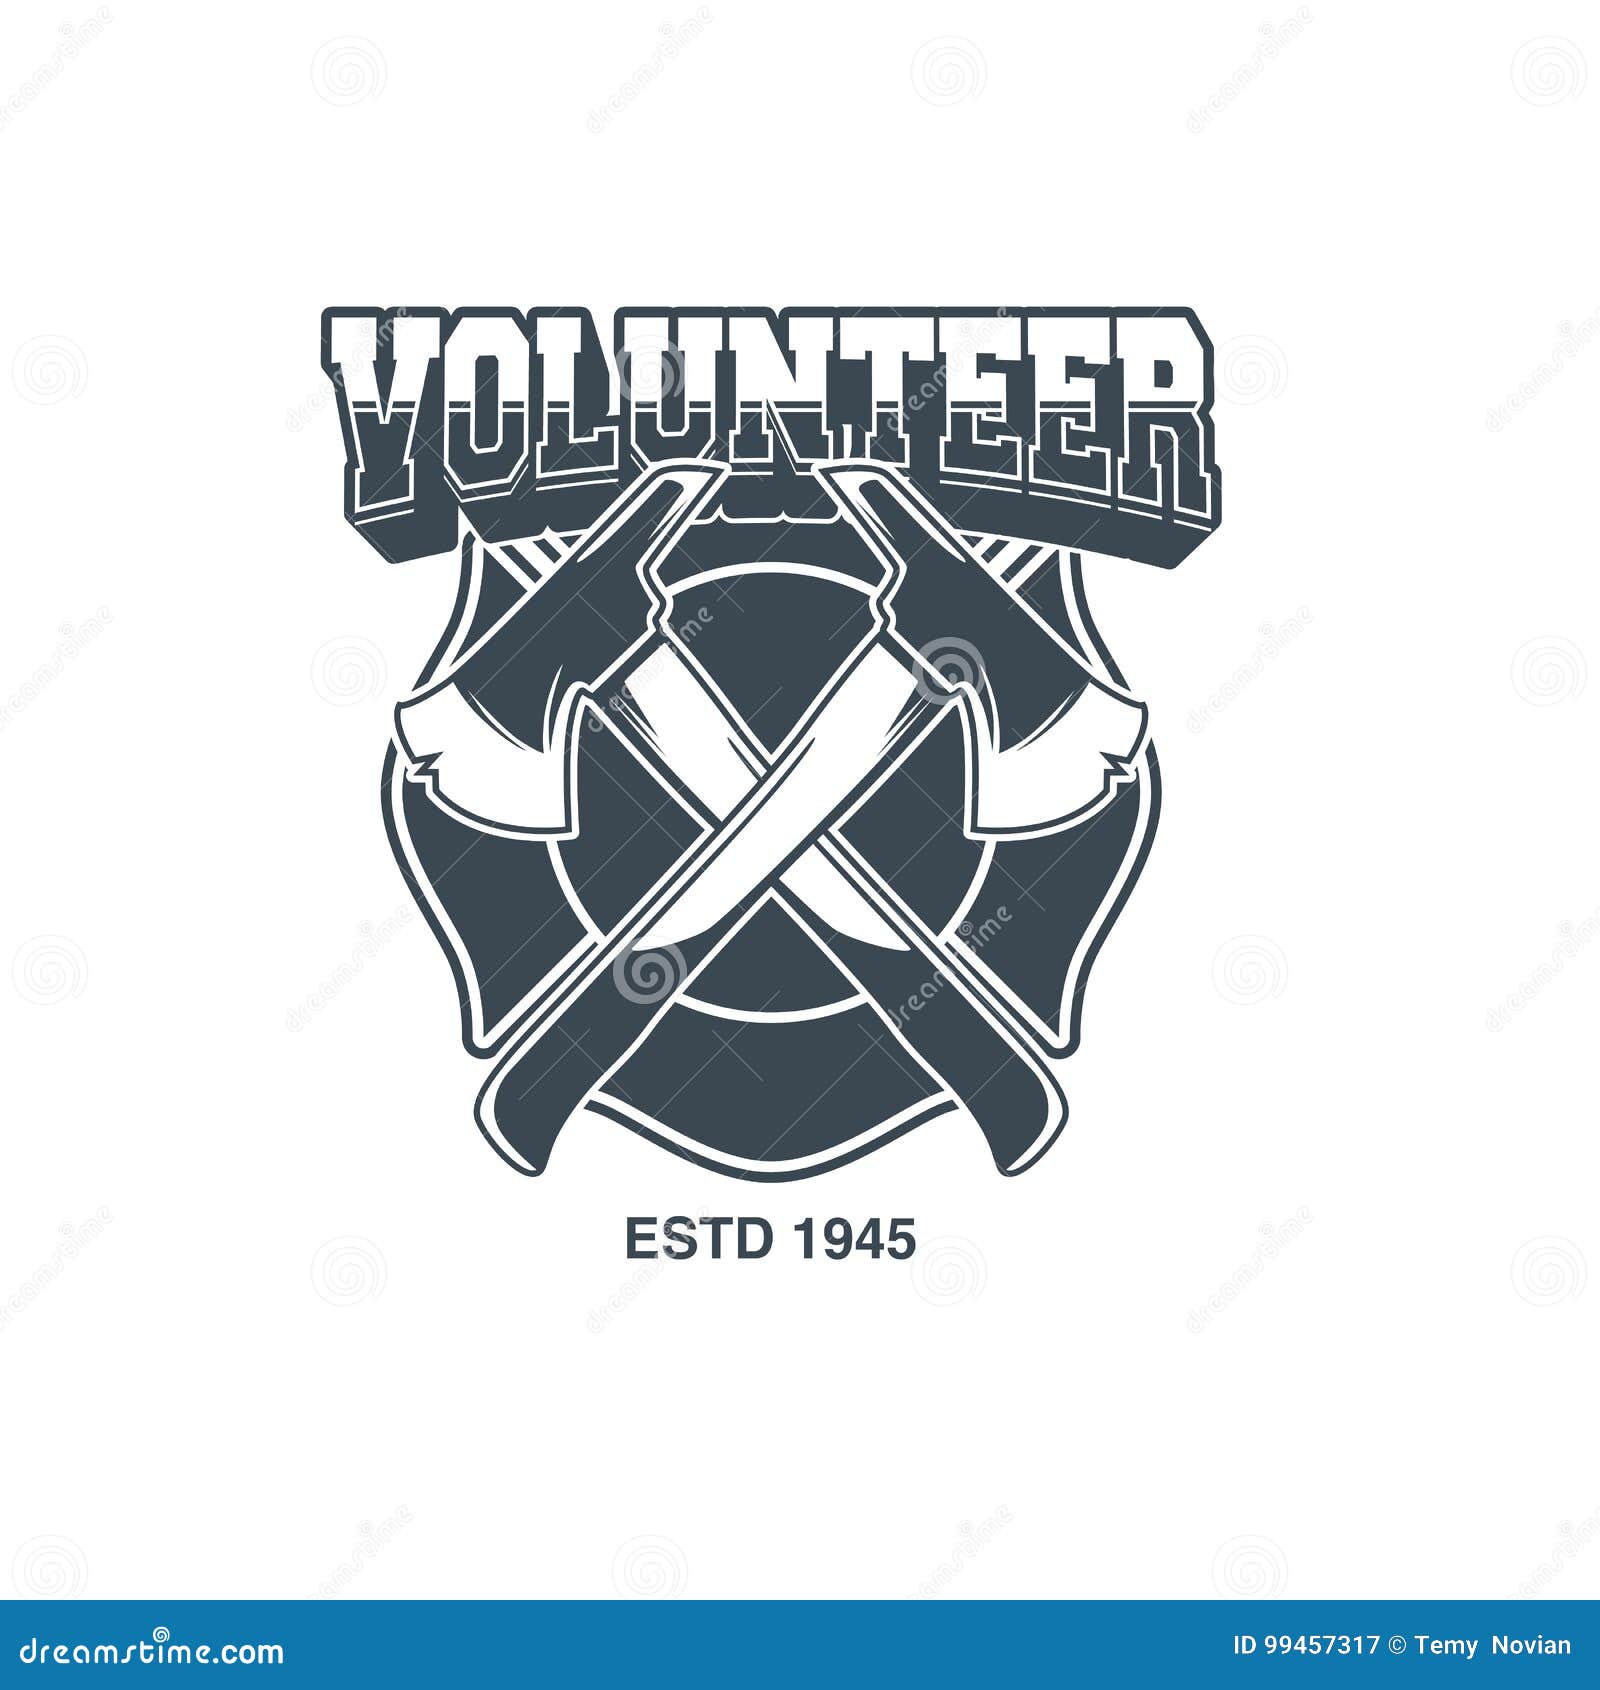 Firefighters vector emblem stock vector. Illustration of fire - 99457317